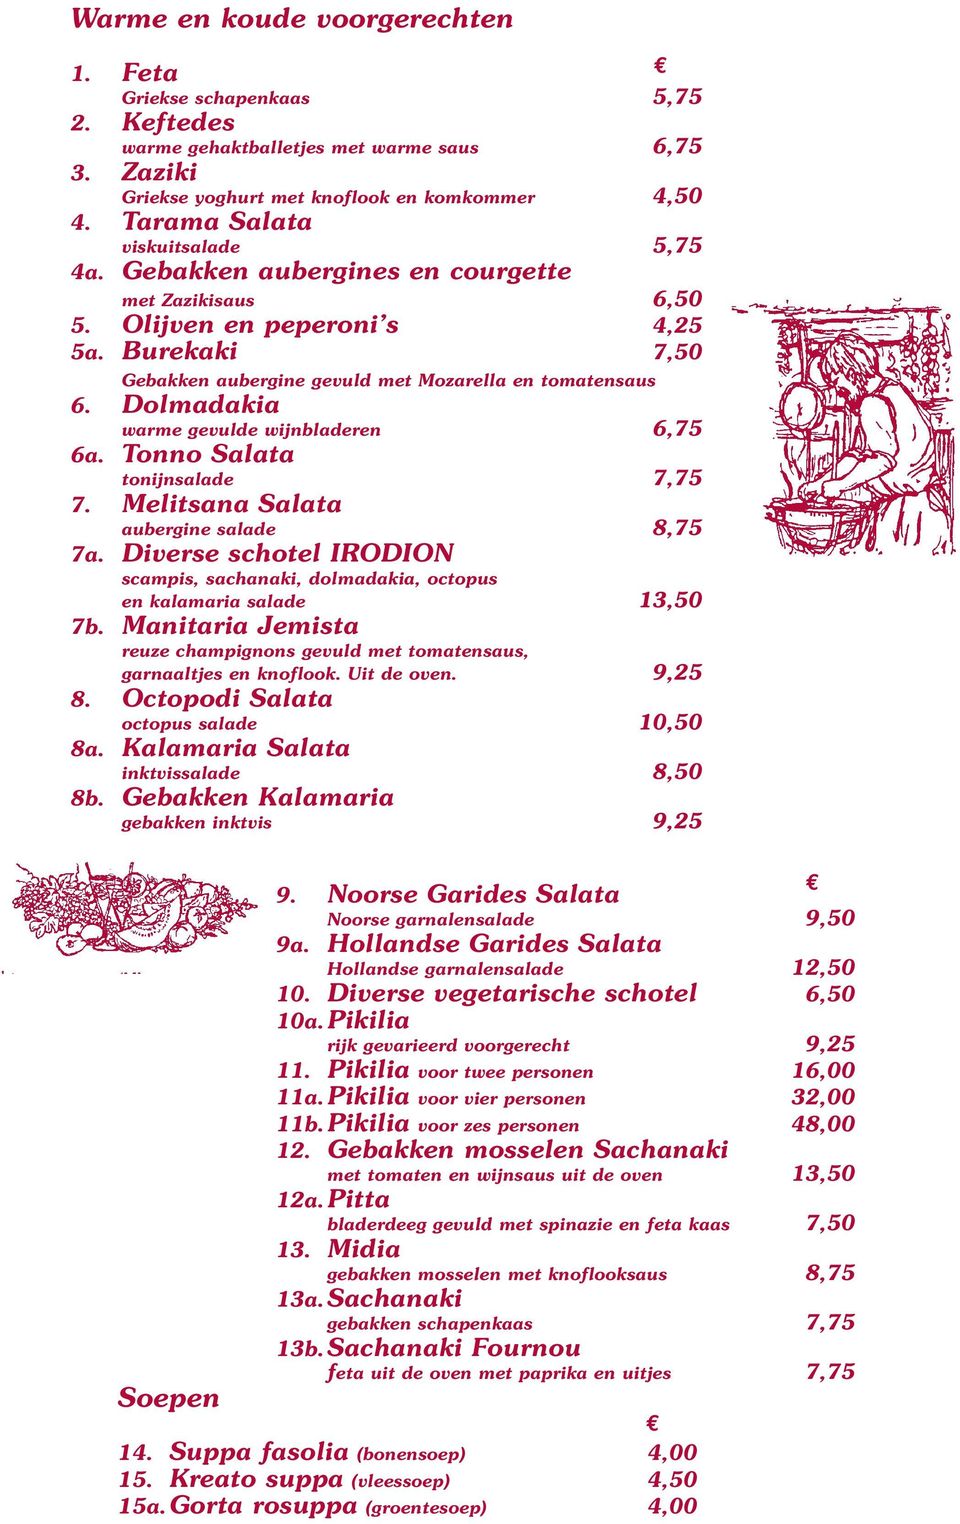 Dolmadakia warme gevulde wijnbladeren 6,75 6a. Tonno Salata tonijnsalade 7,75 7. Melitsana Salata aubergine salade 8,75 7a.